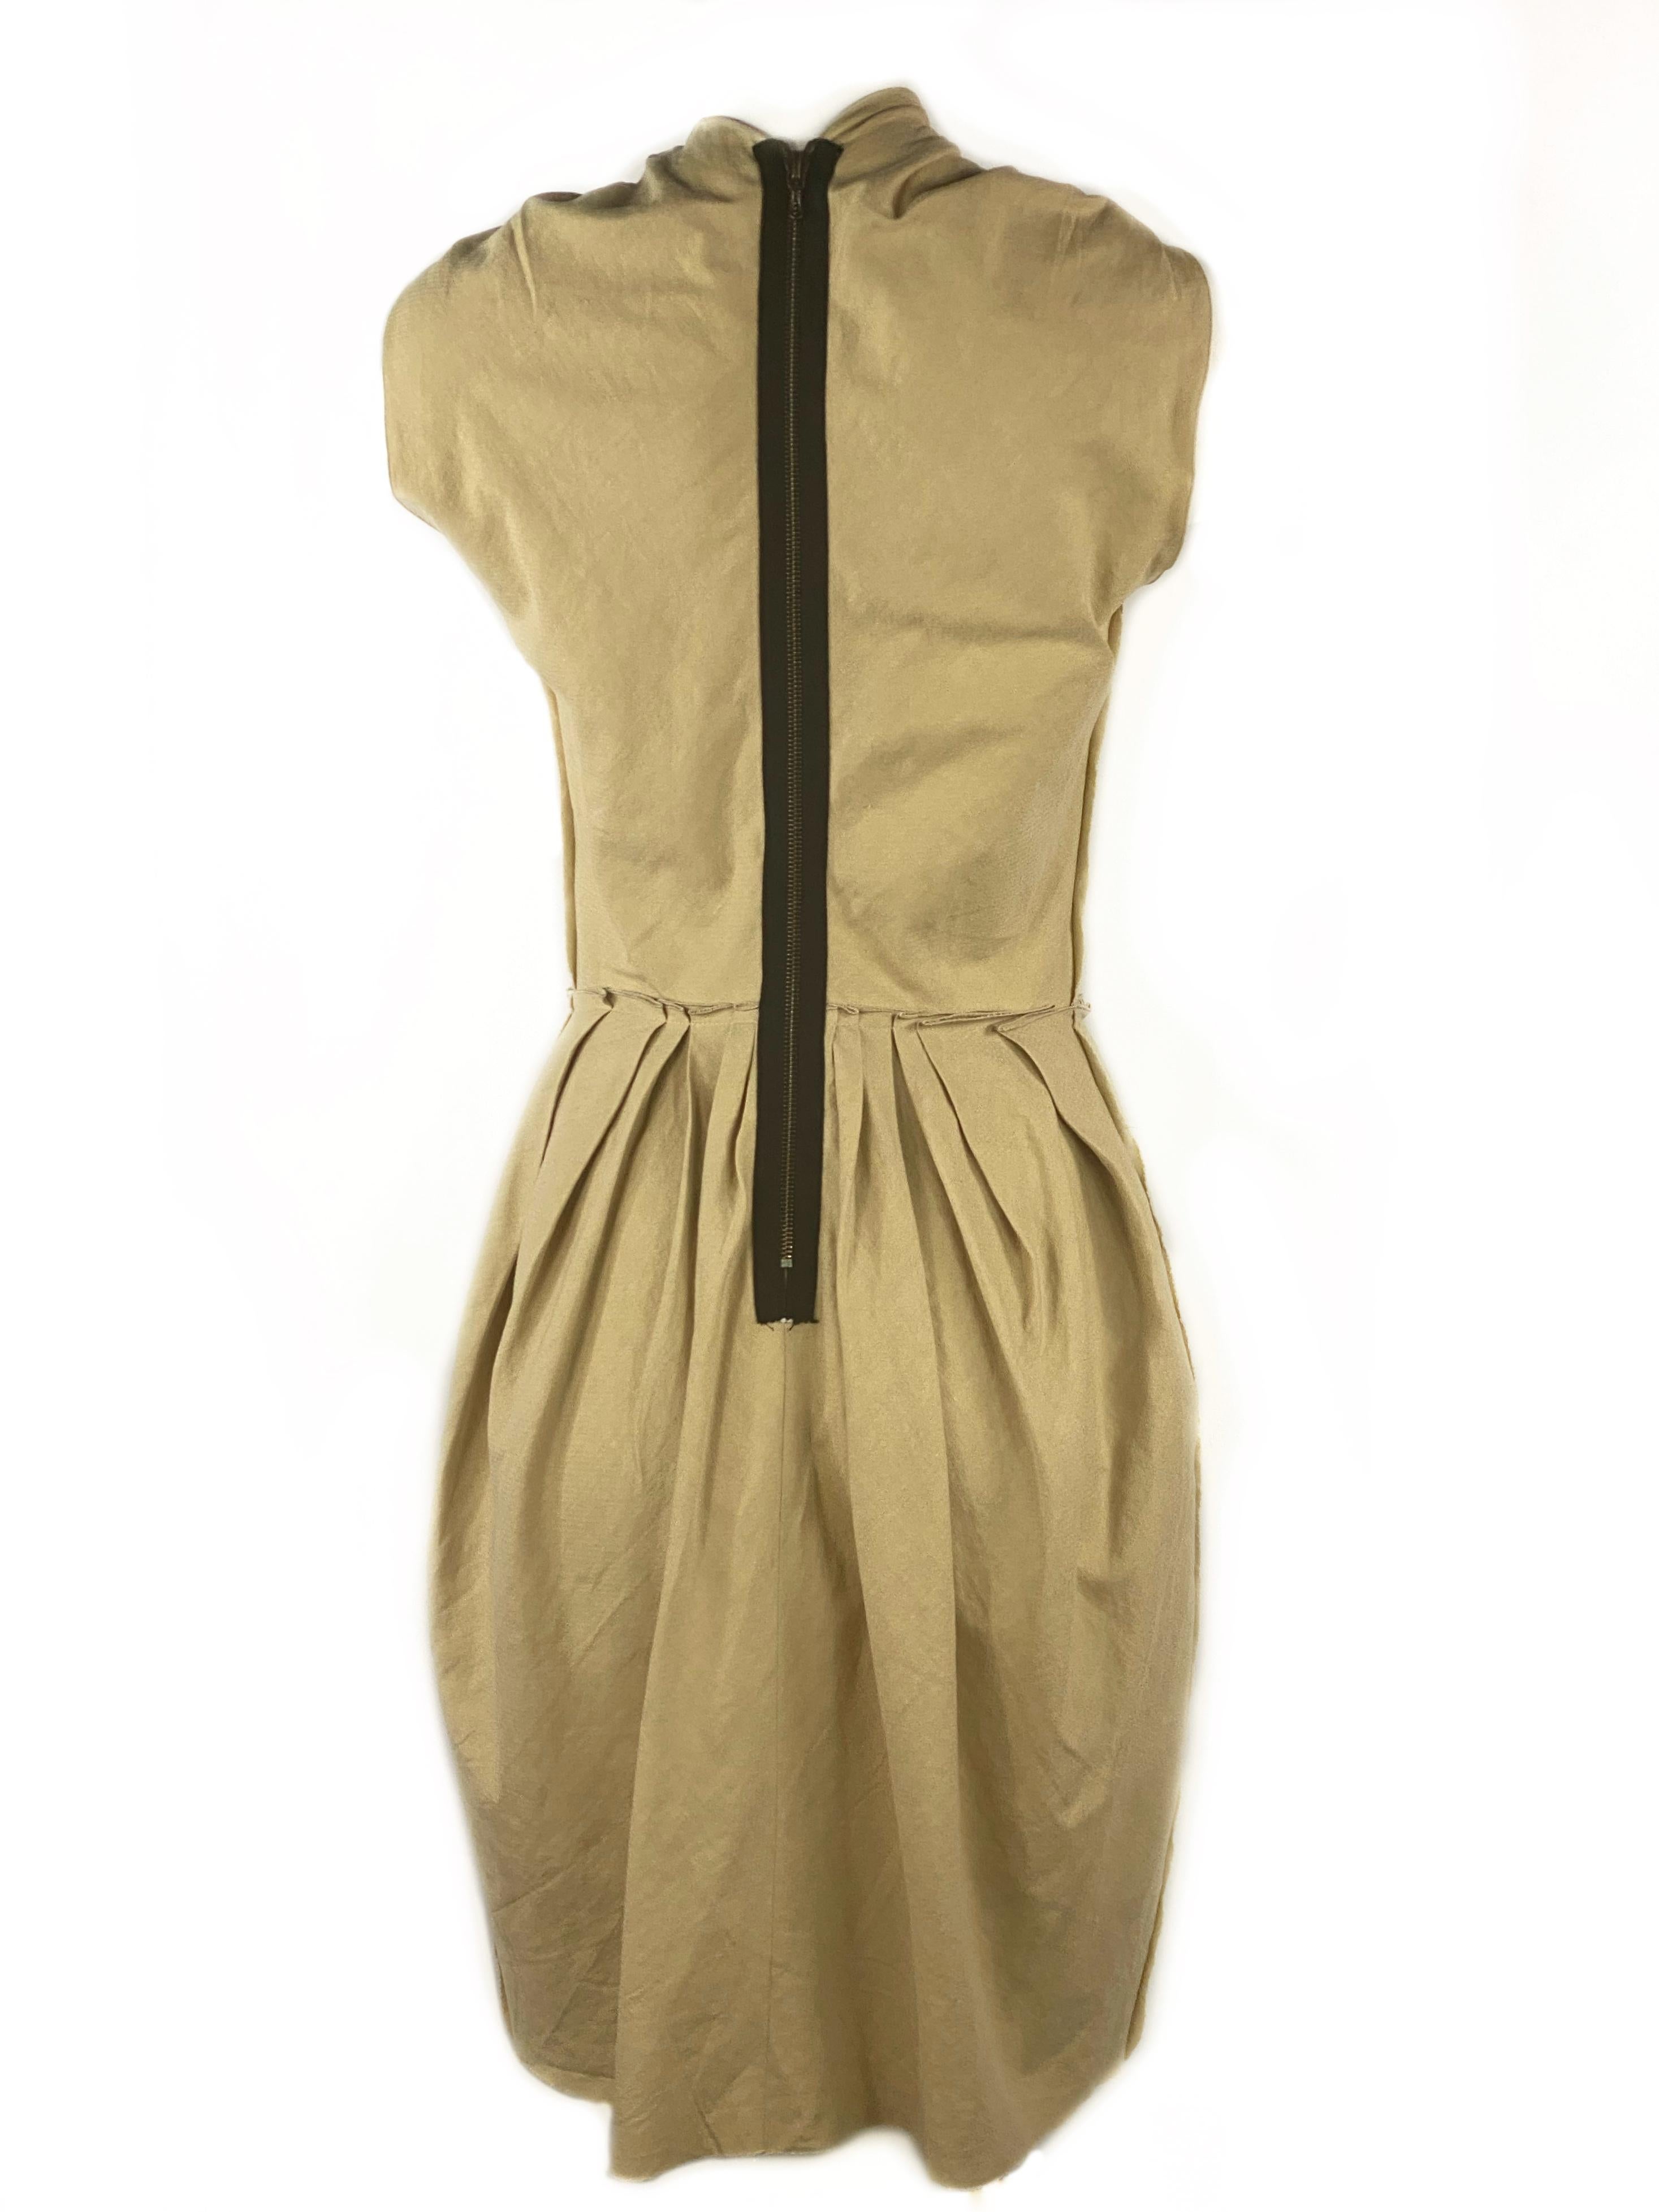 LANVIN Est. 2009 Beige Sleeveless Mini dress w/ Zipper Size 36 1